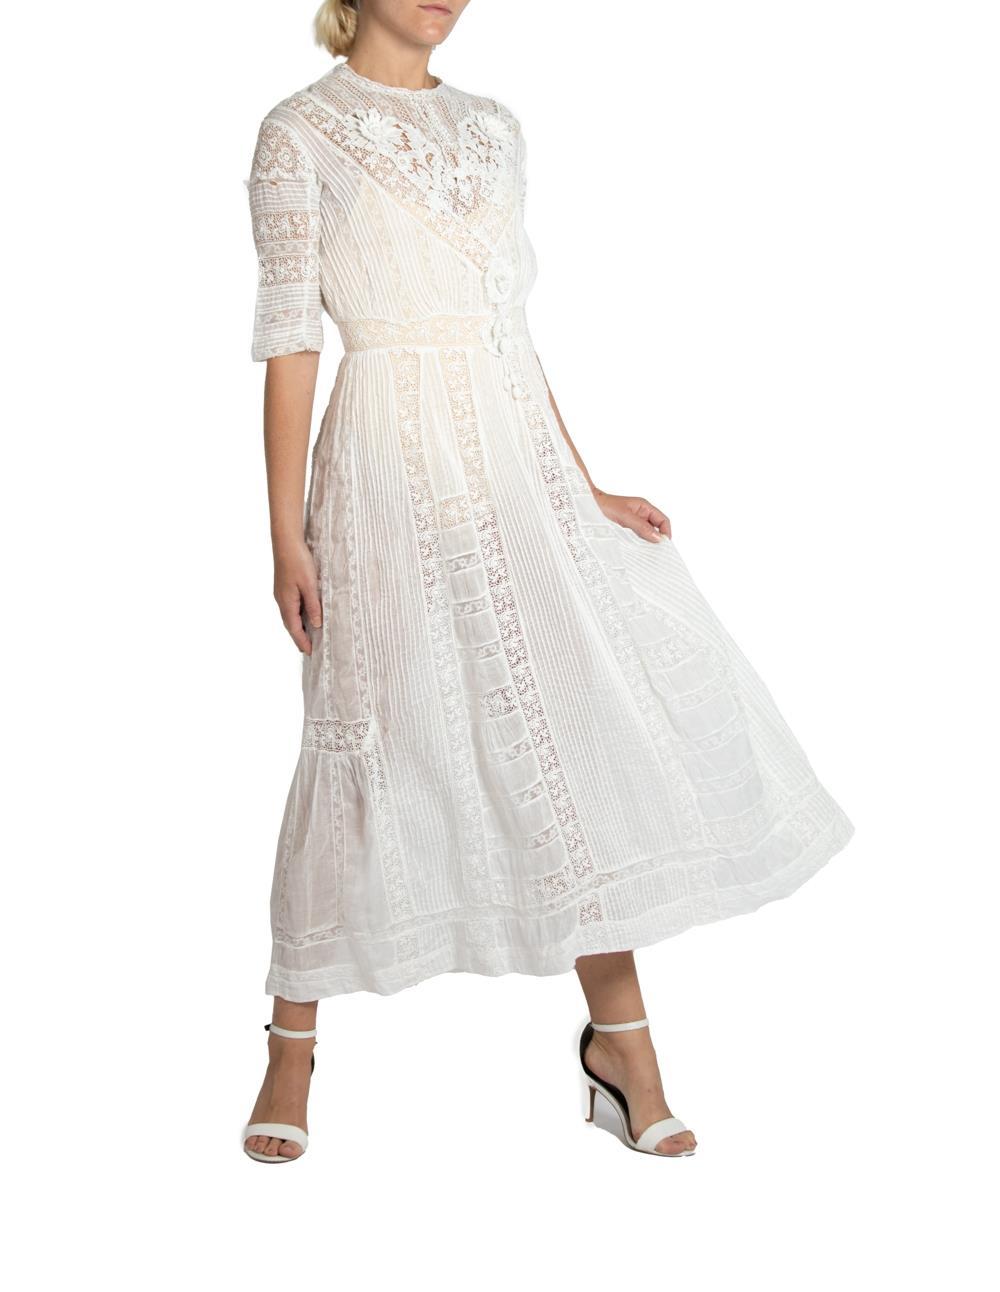 Edwardian White Cotton & Lace Tea Dress With 3-D Flowers For Sale 5